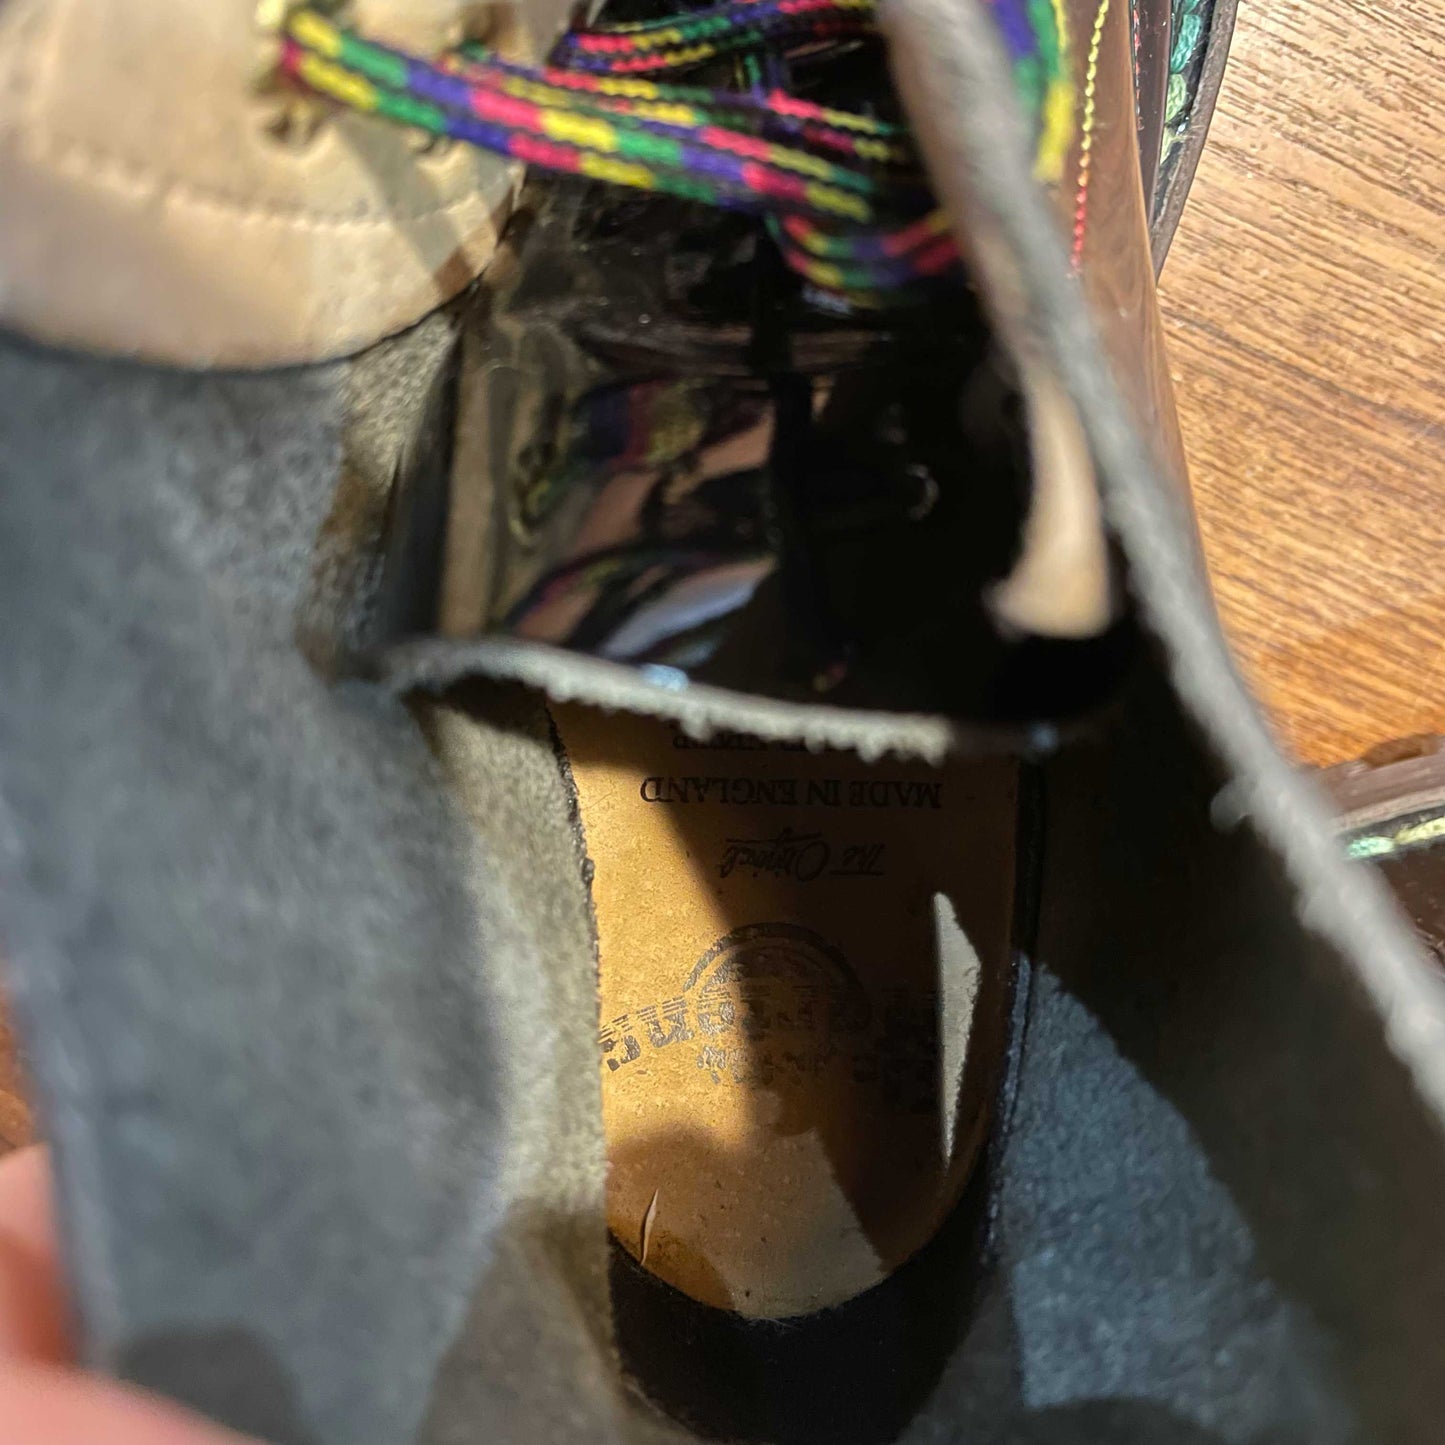 doc martens black patent rainbow stitch boots - size 1